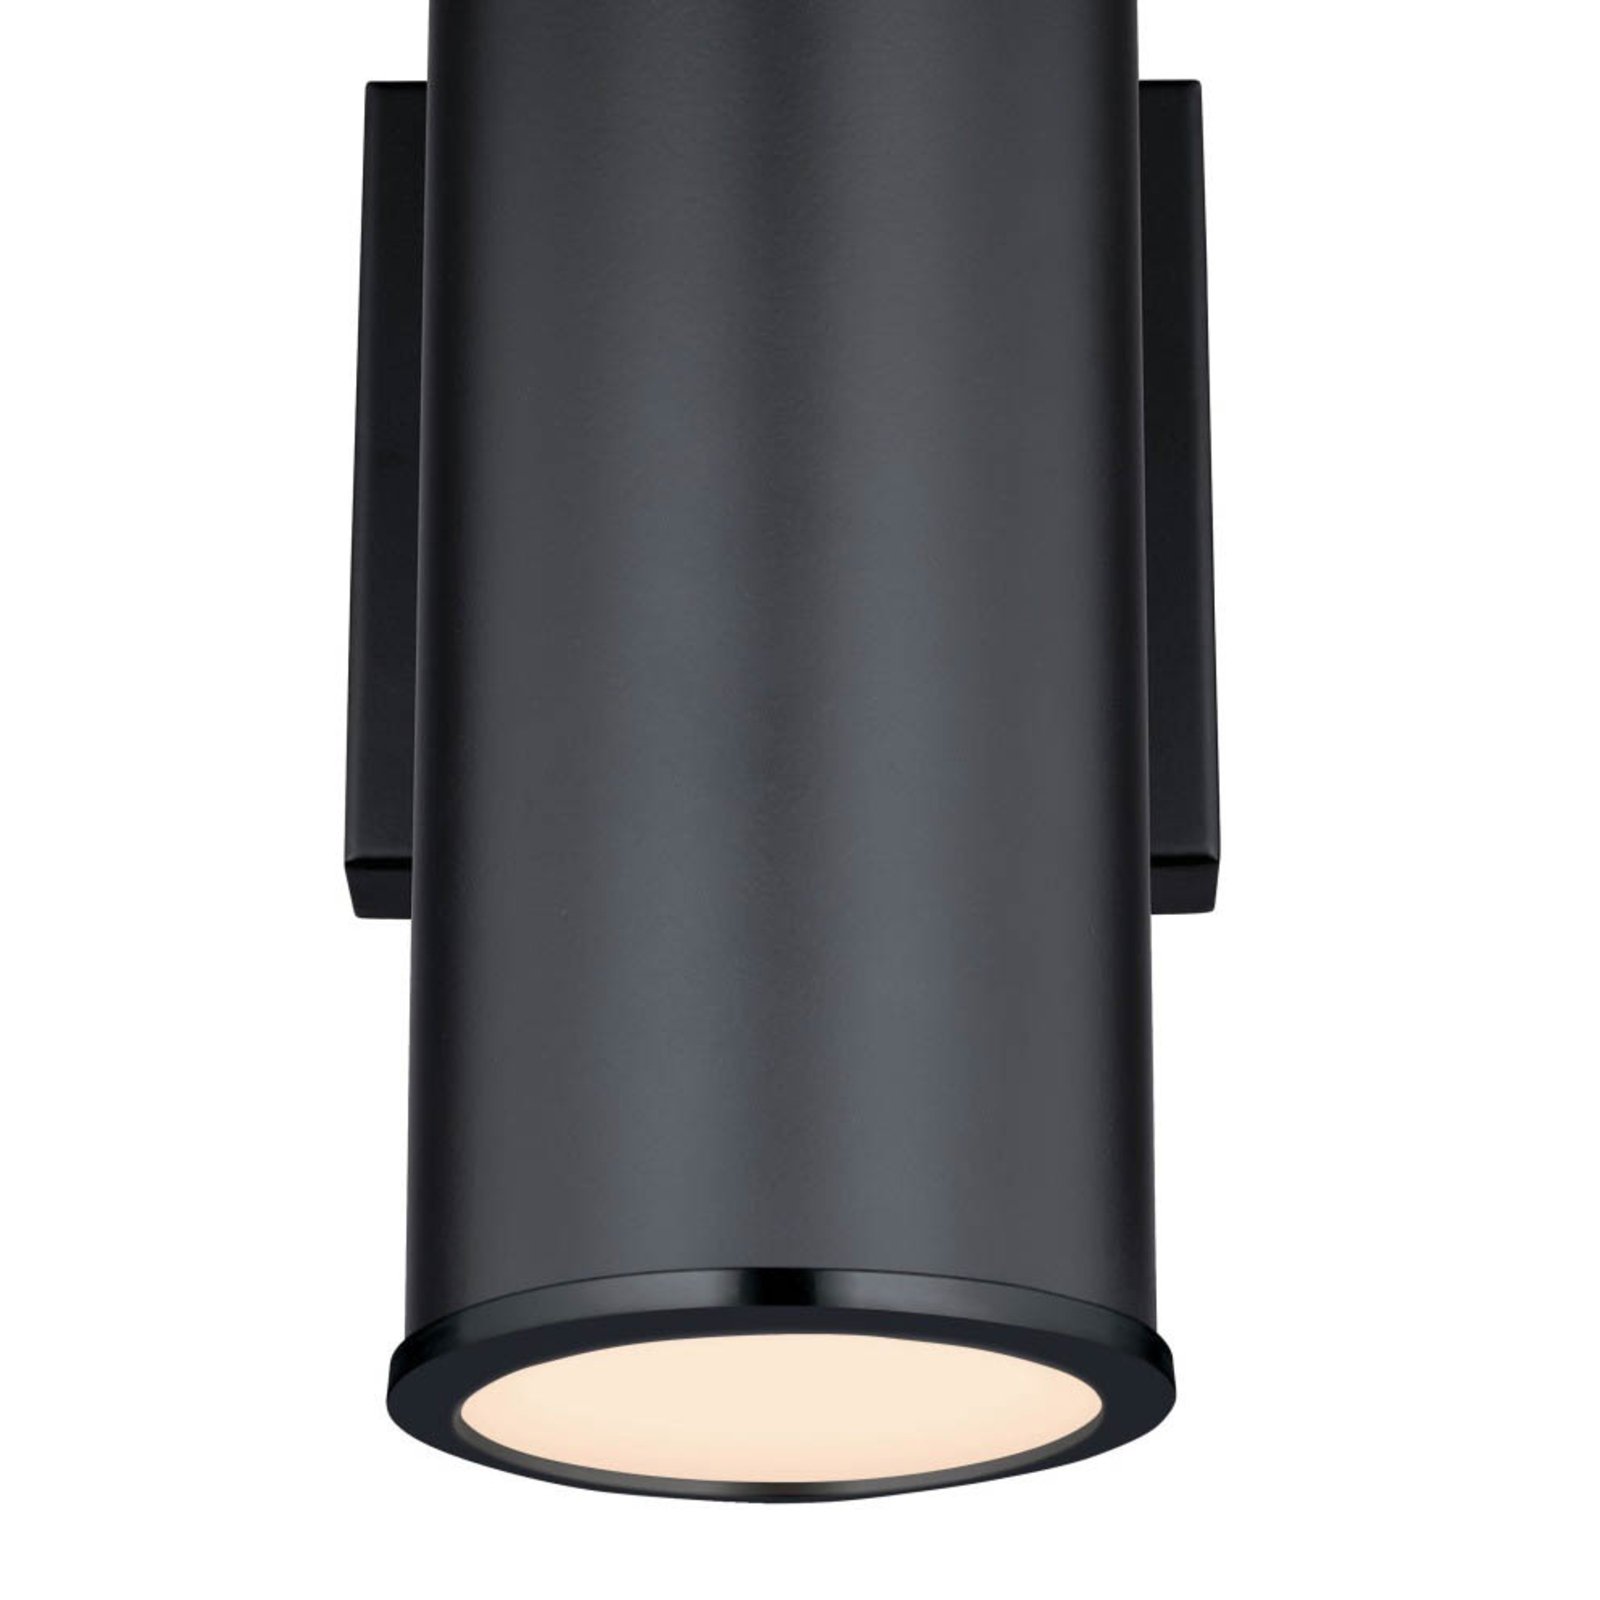 Westinghouse Marius outdoor wall light, black, 2-bulb